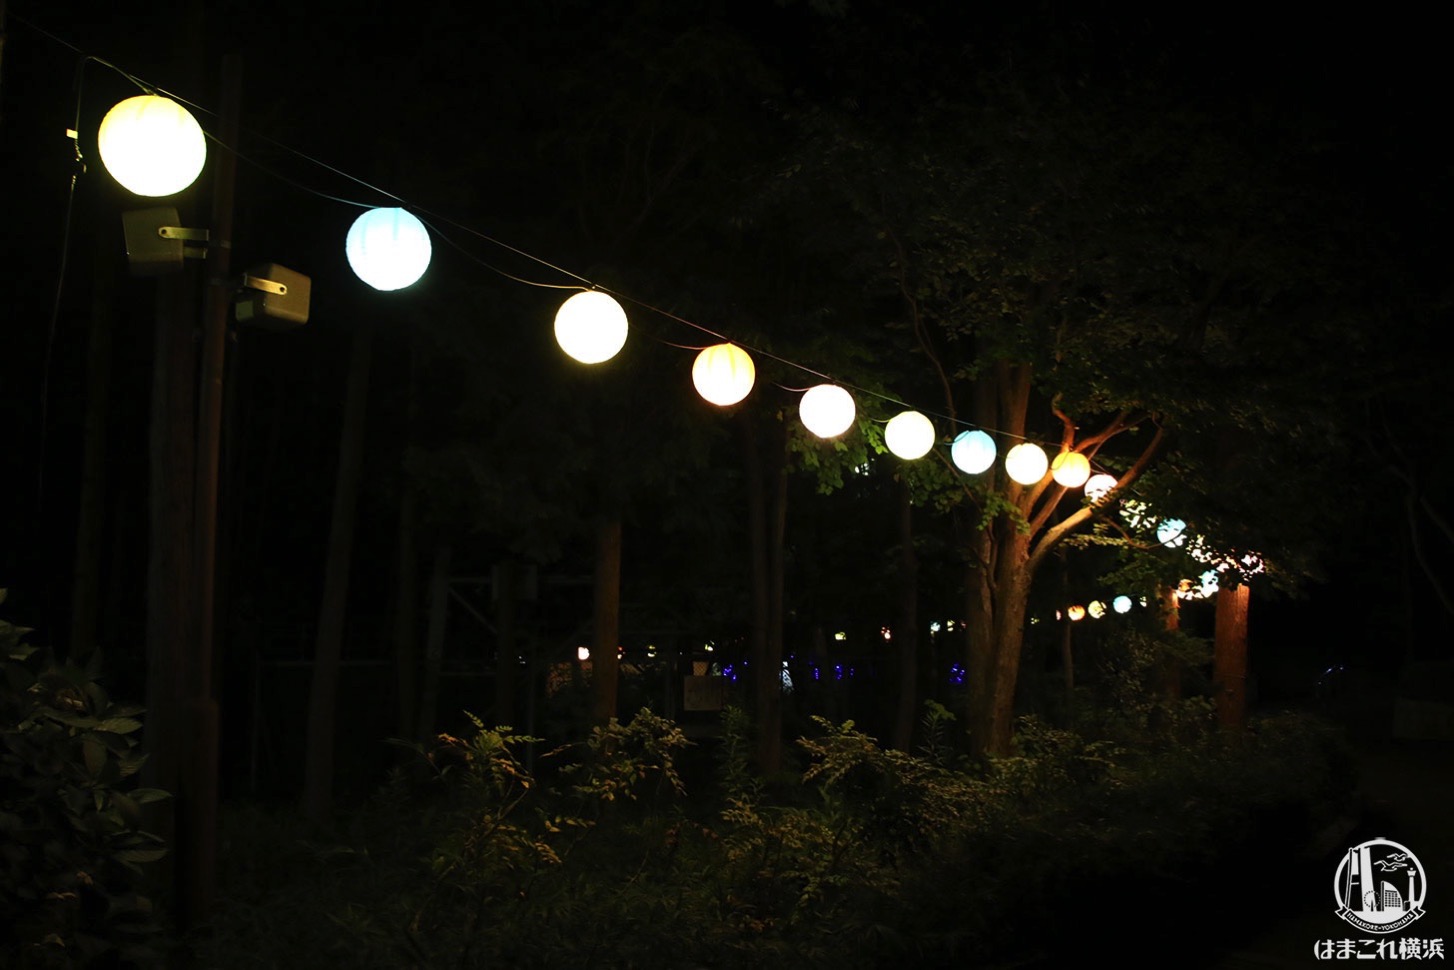 金沢動物園 夜の雰囲気